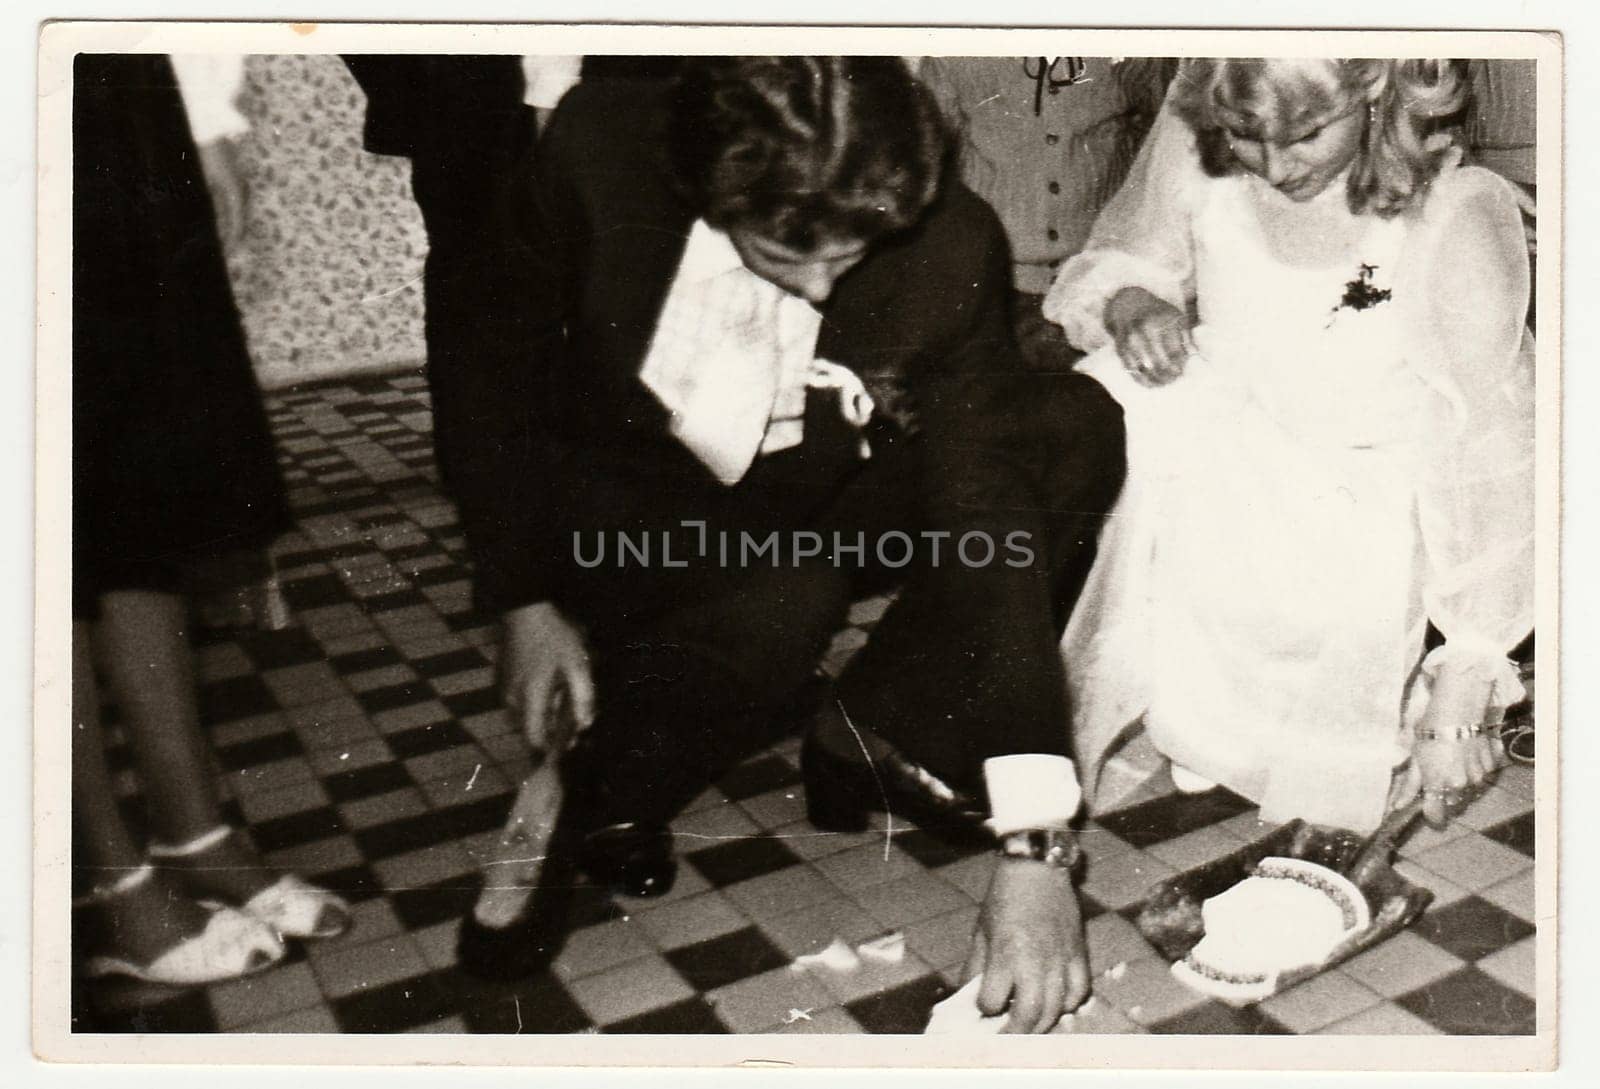 Retro photo shows people on wedding celebration. Black and white vintage photography. by roman_nerud